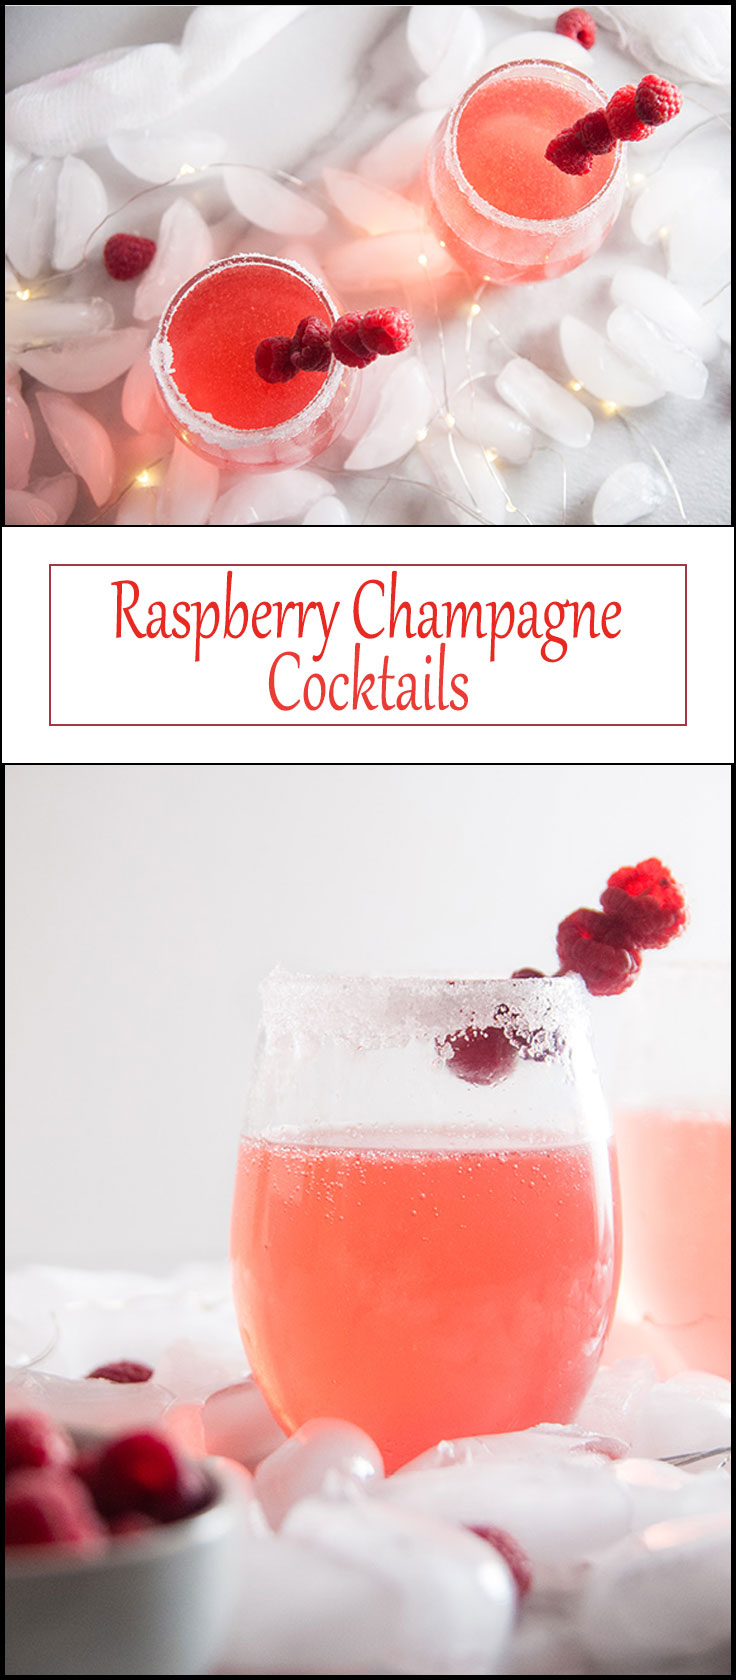 Raspberry Champagne Cocktails from www.seasonedsprinkles.com